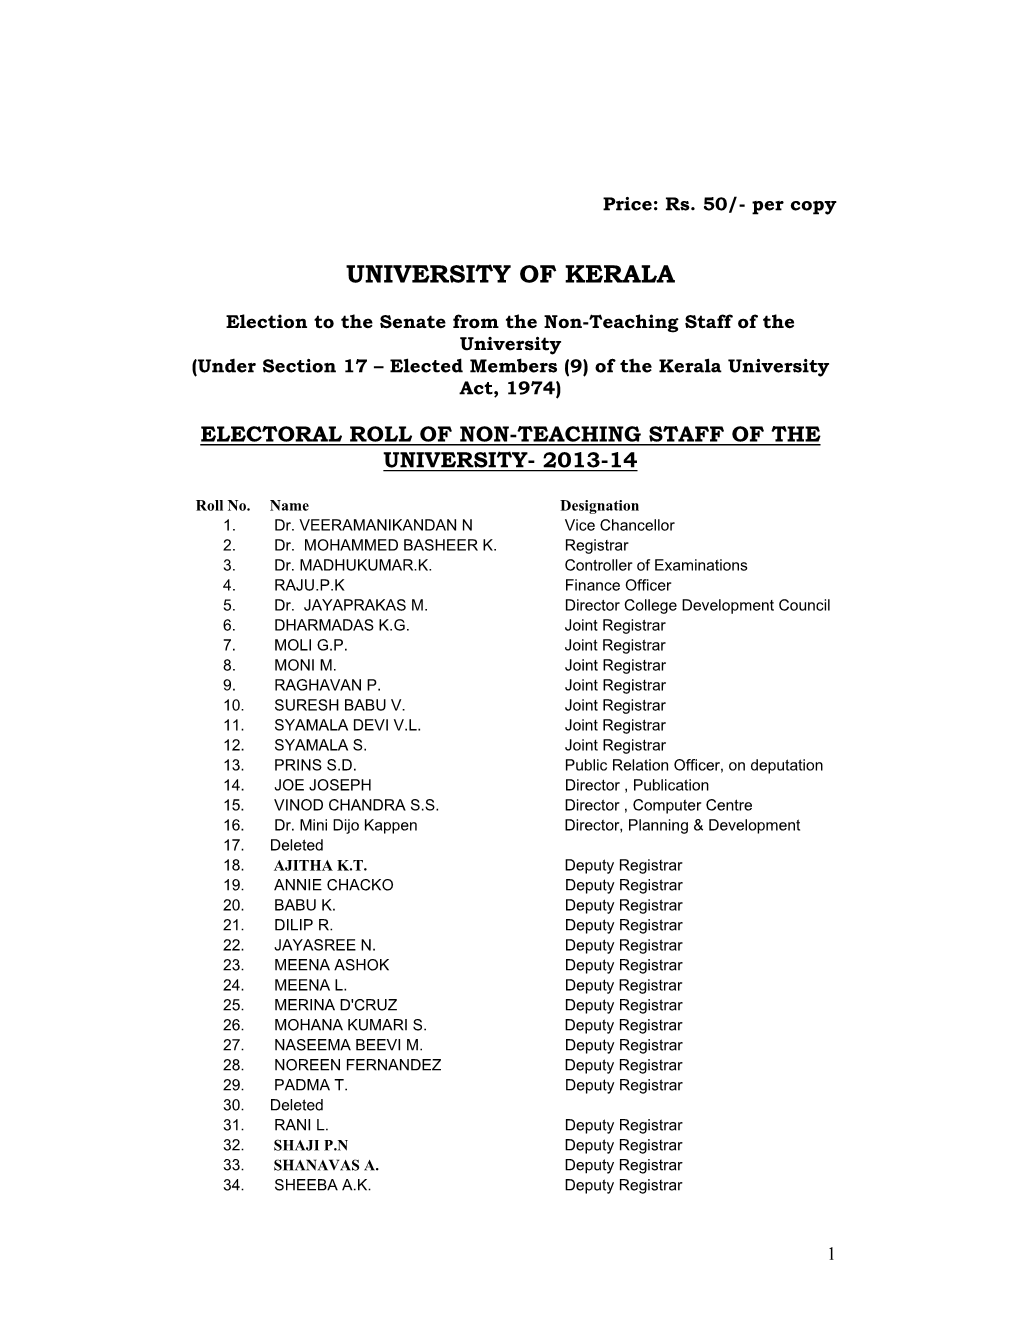 Non-Teaching Staffs of University